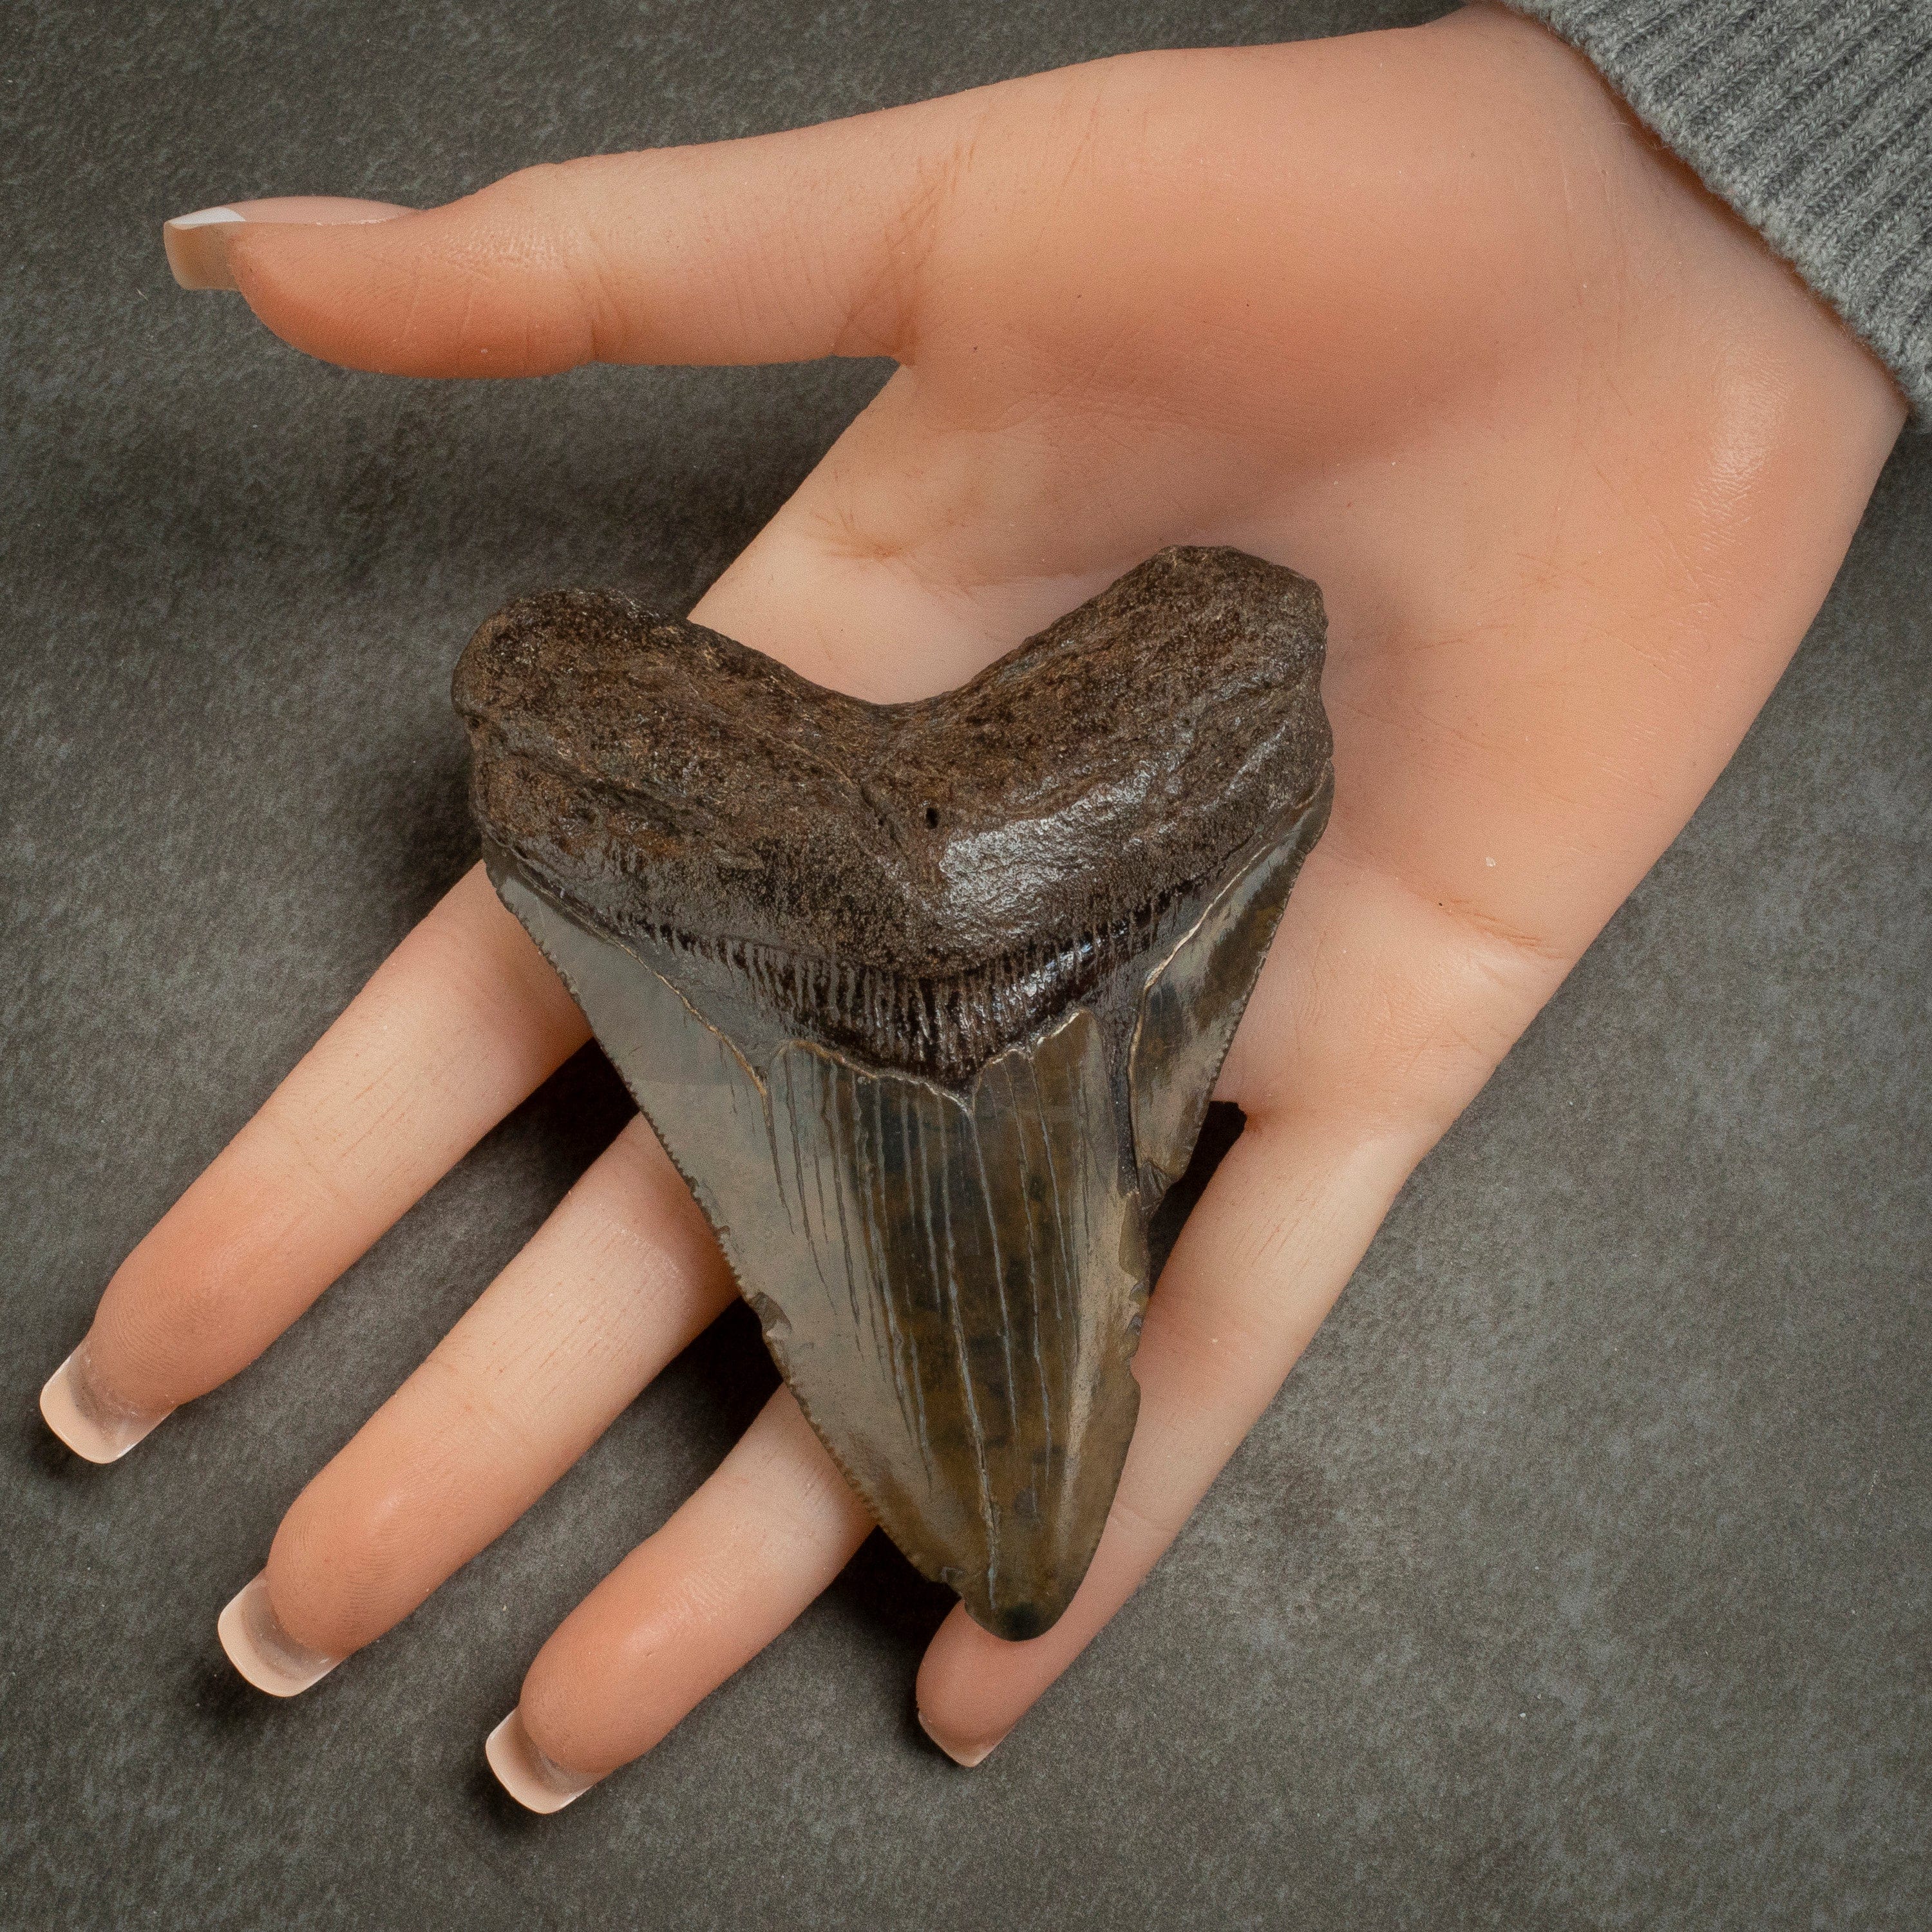 Kalifano Megalodon Teeth Megalodon Tooth from South Carolina - 3.7" ST1400.047